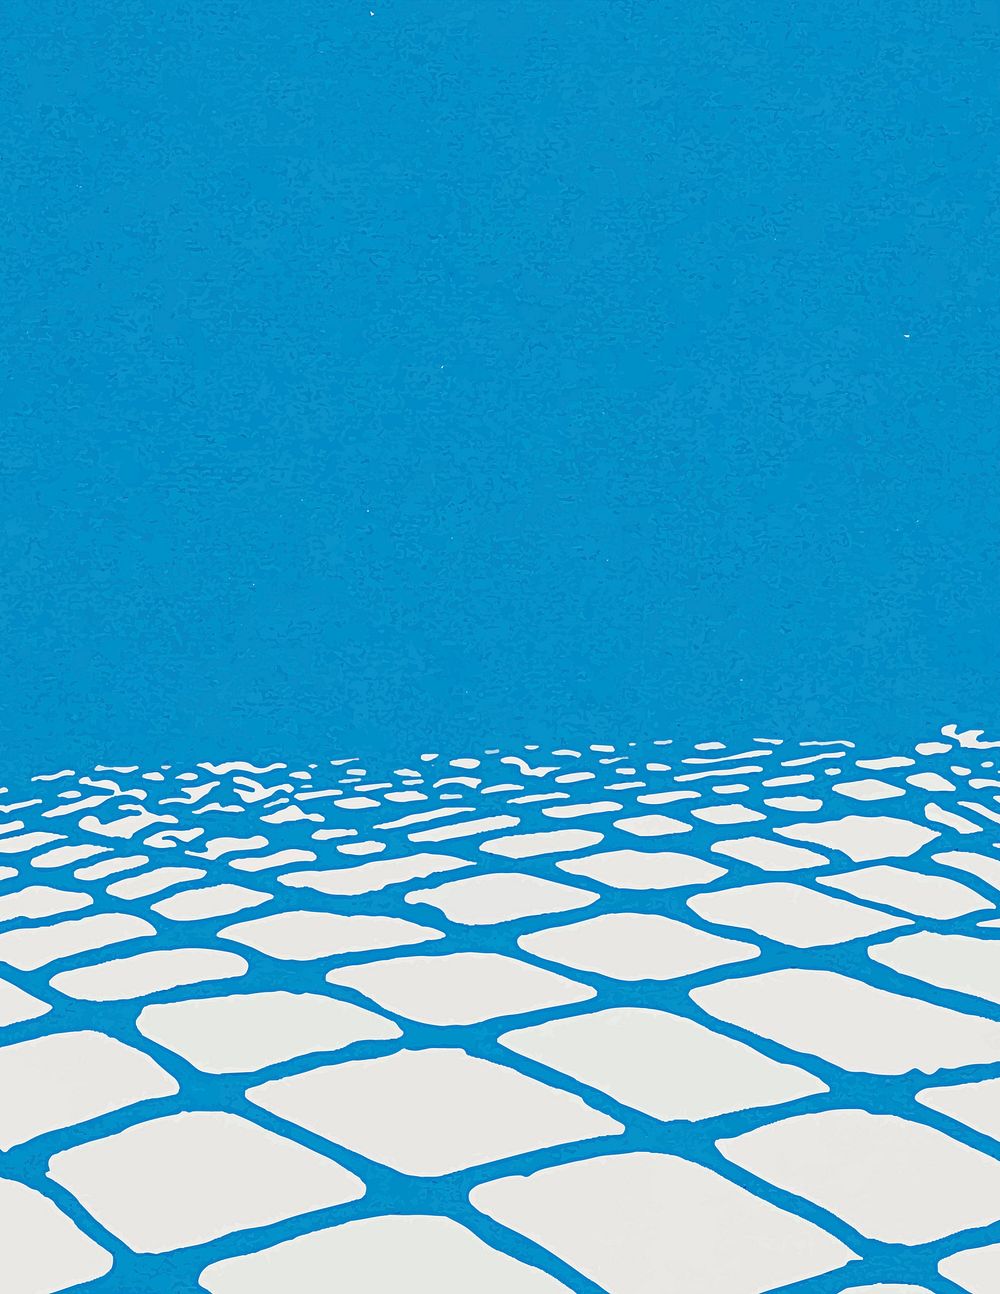 Blue background, minimal white border design